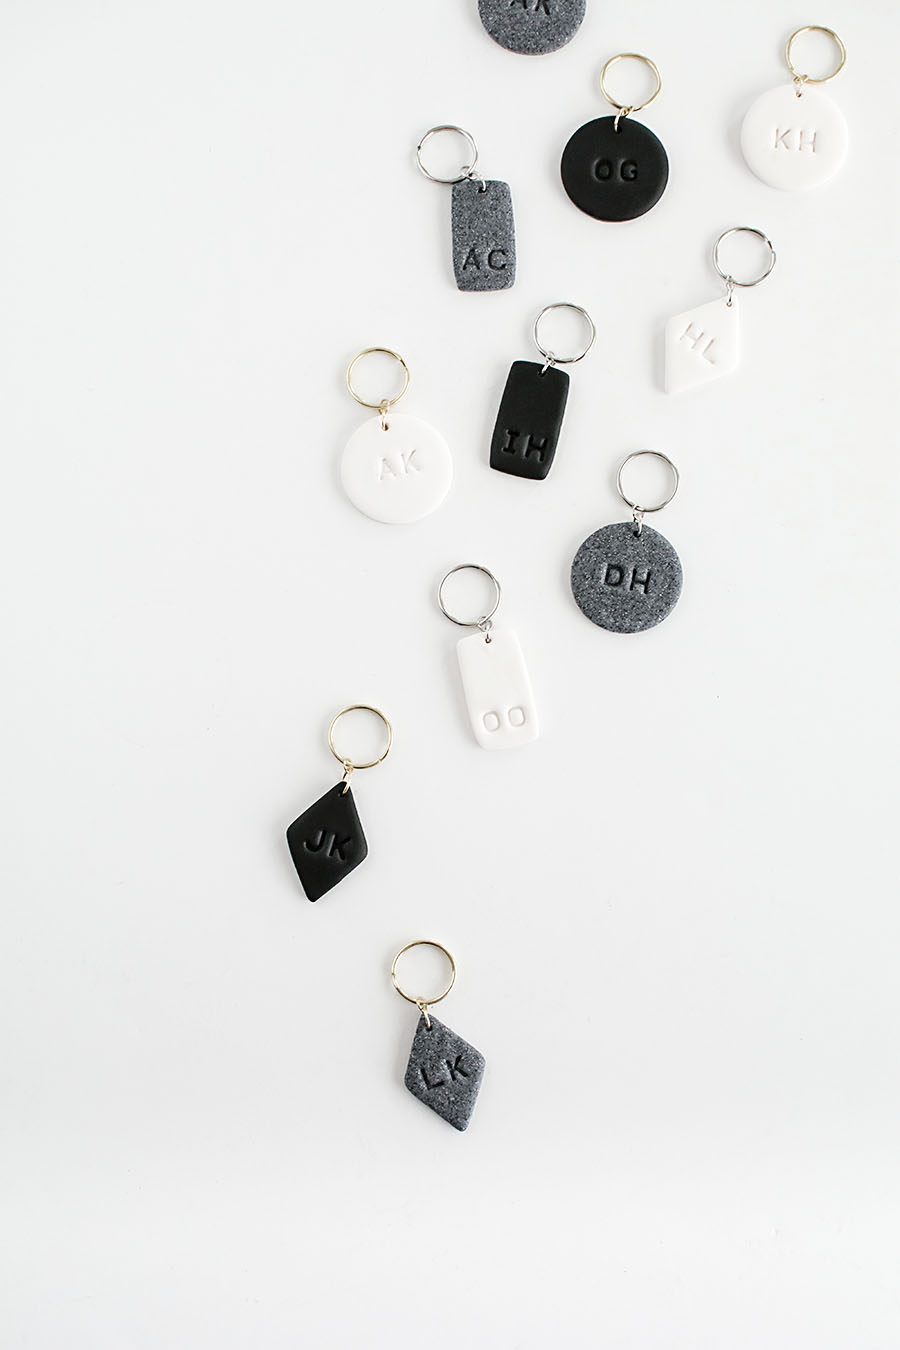 DIY Name Key Chain for Women Men Custom Keychain Car Key Ring